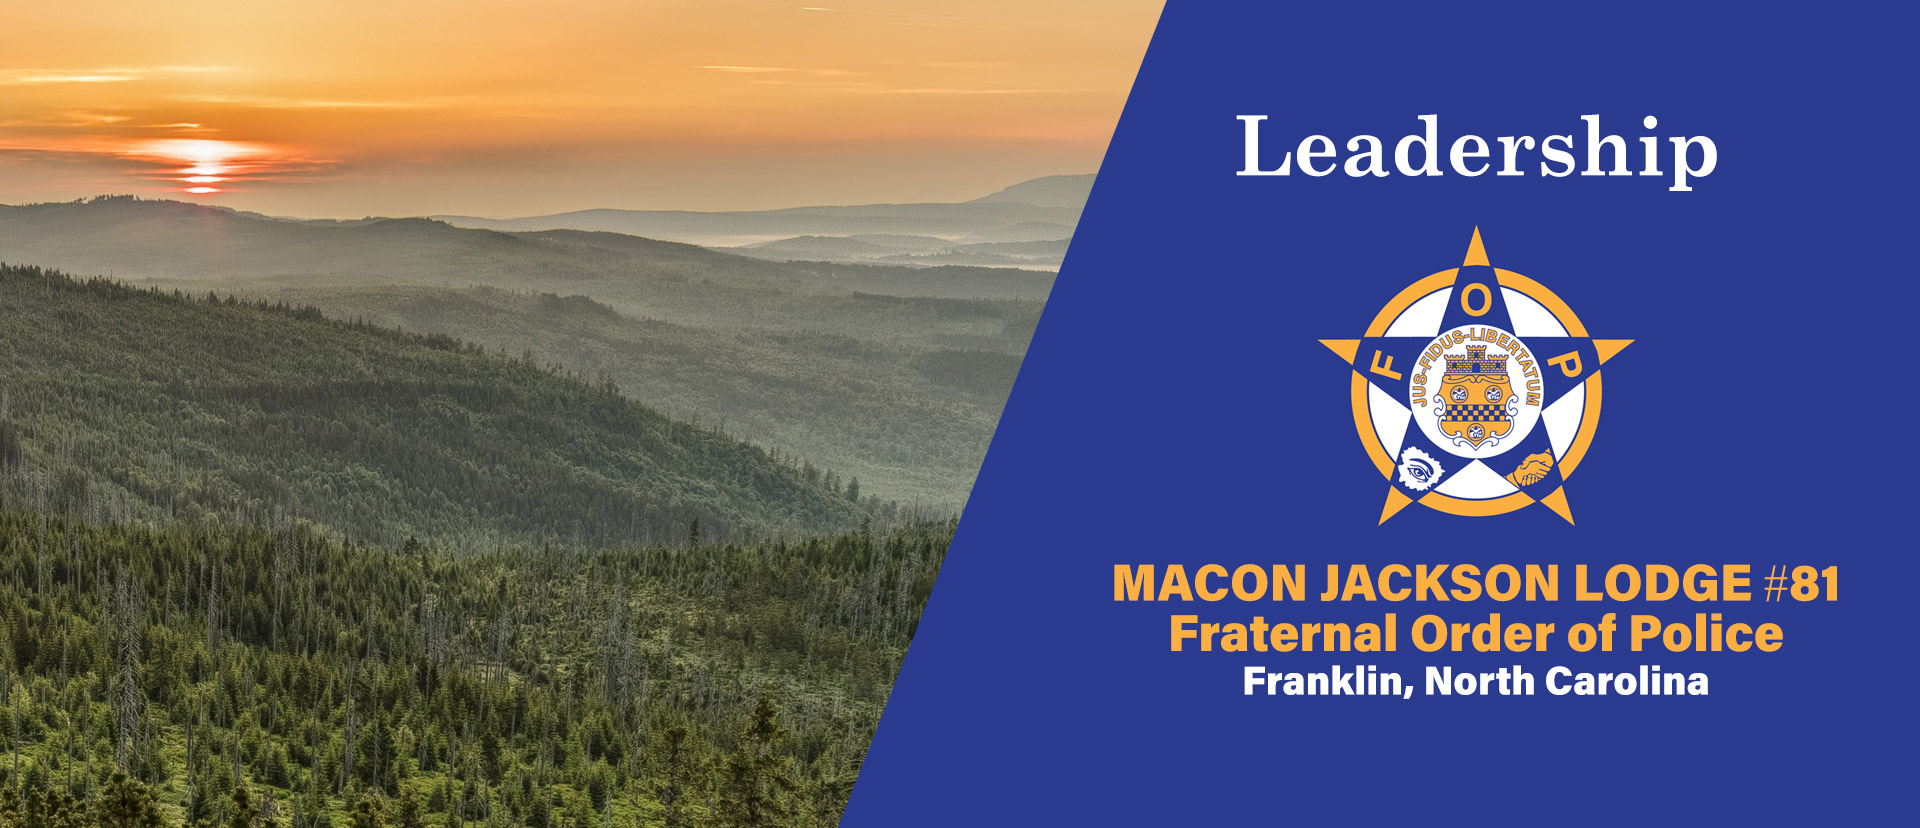 officers leadership fop lodge 81 franklin nc macon jackson county